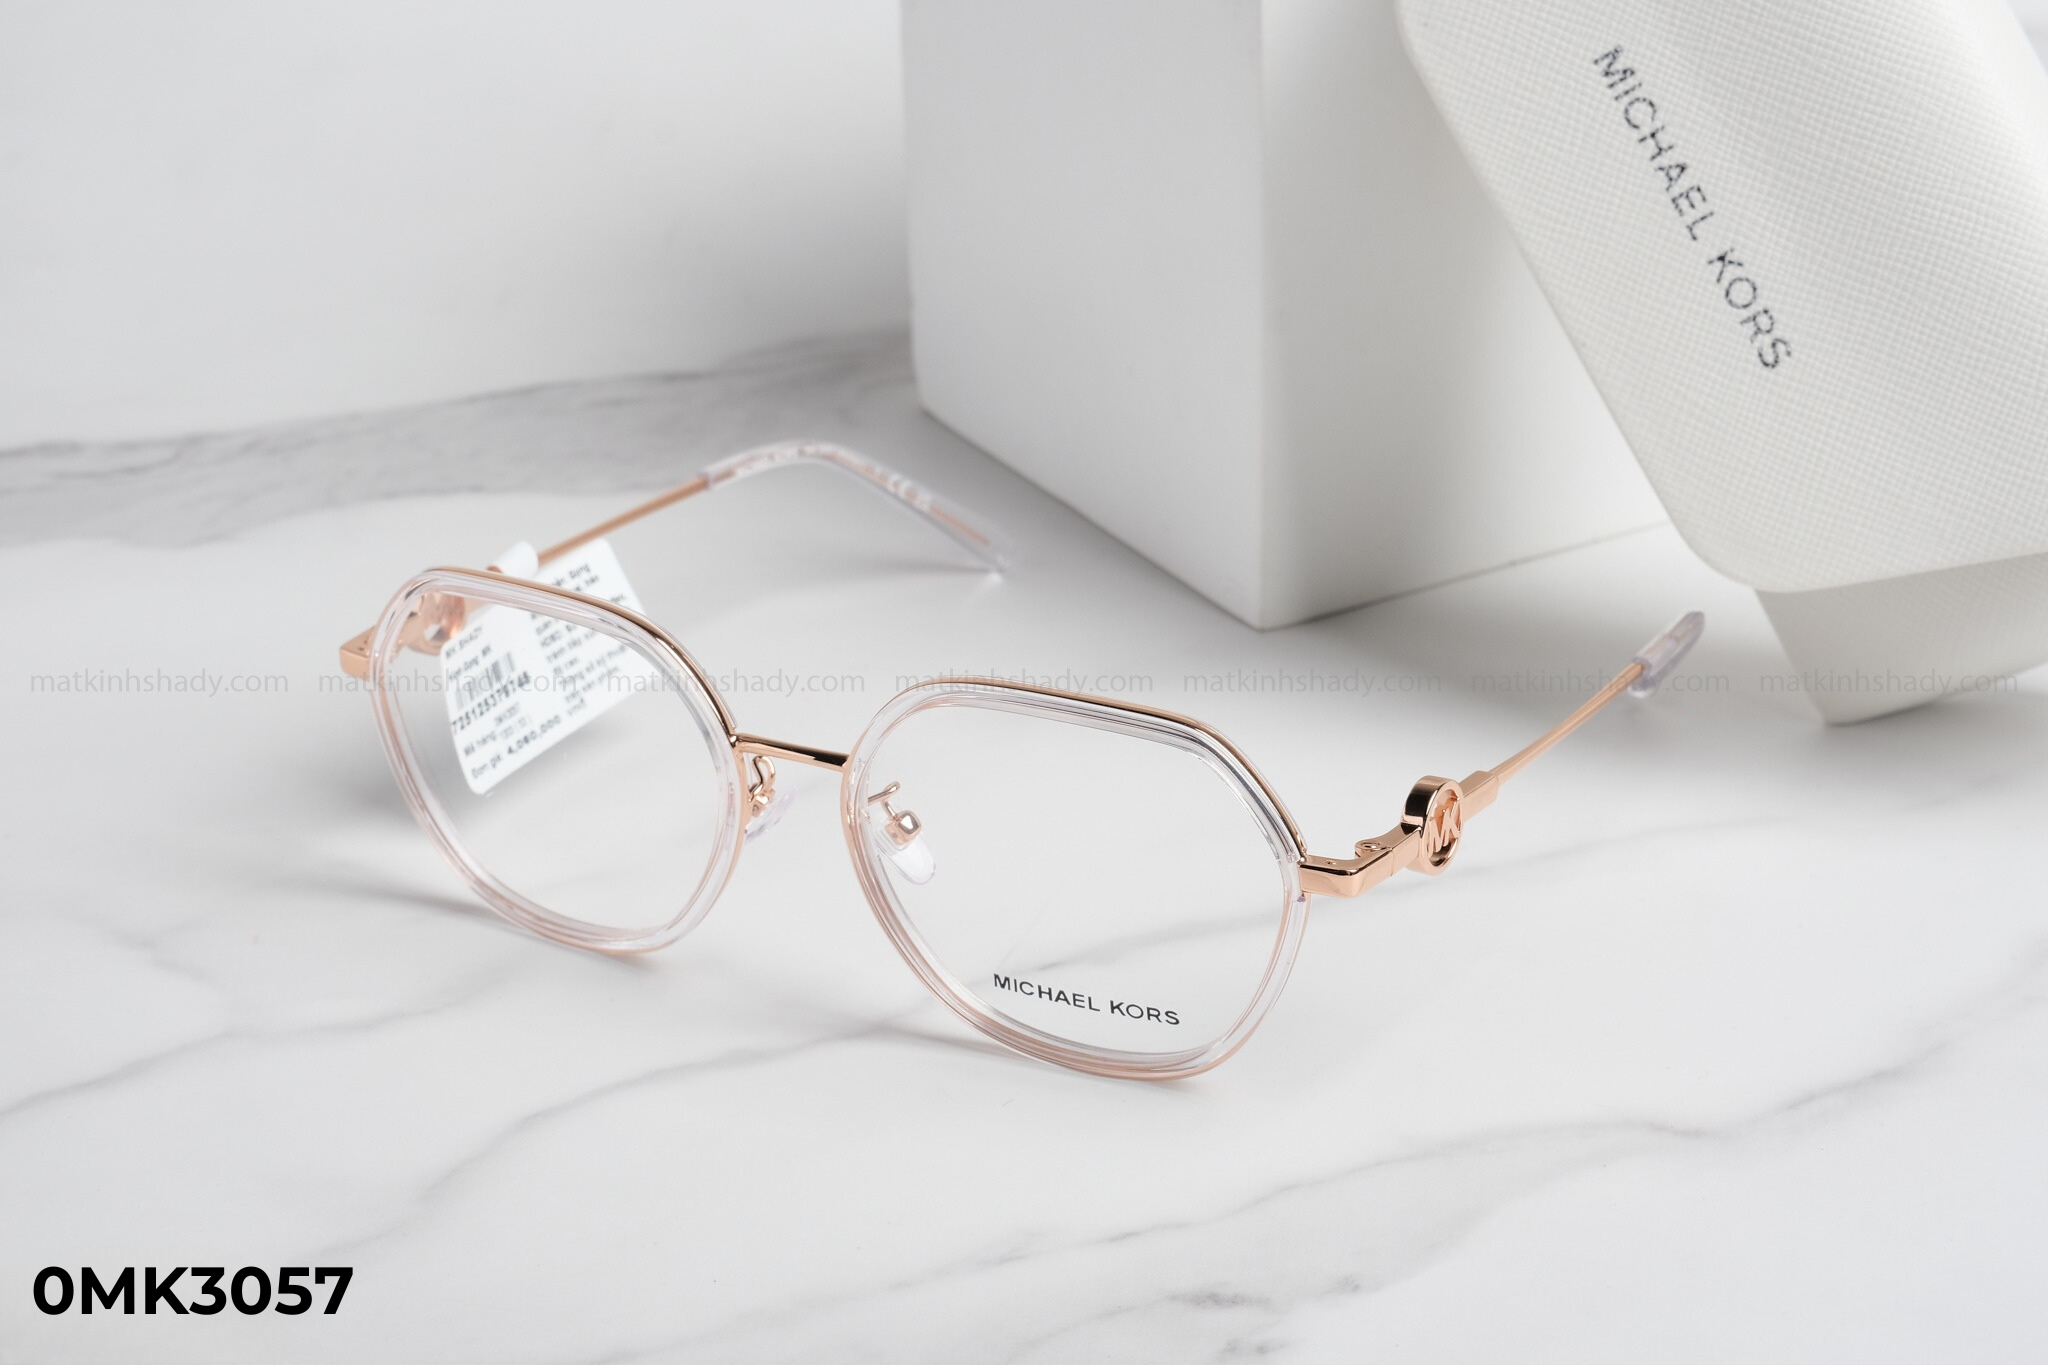  Michael Kors Eyewear - Glasses - 0MK3057 